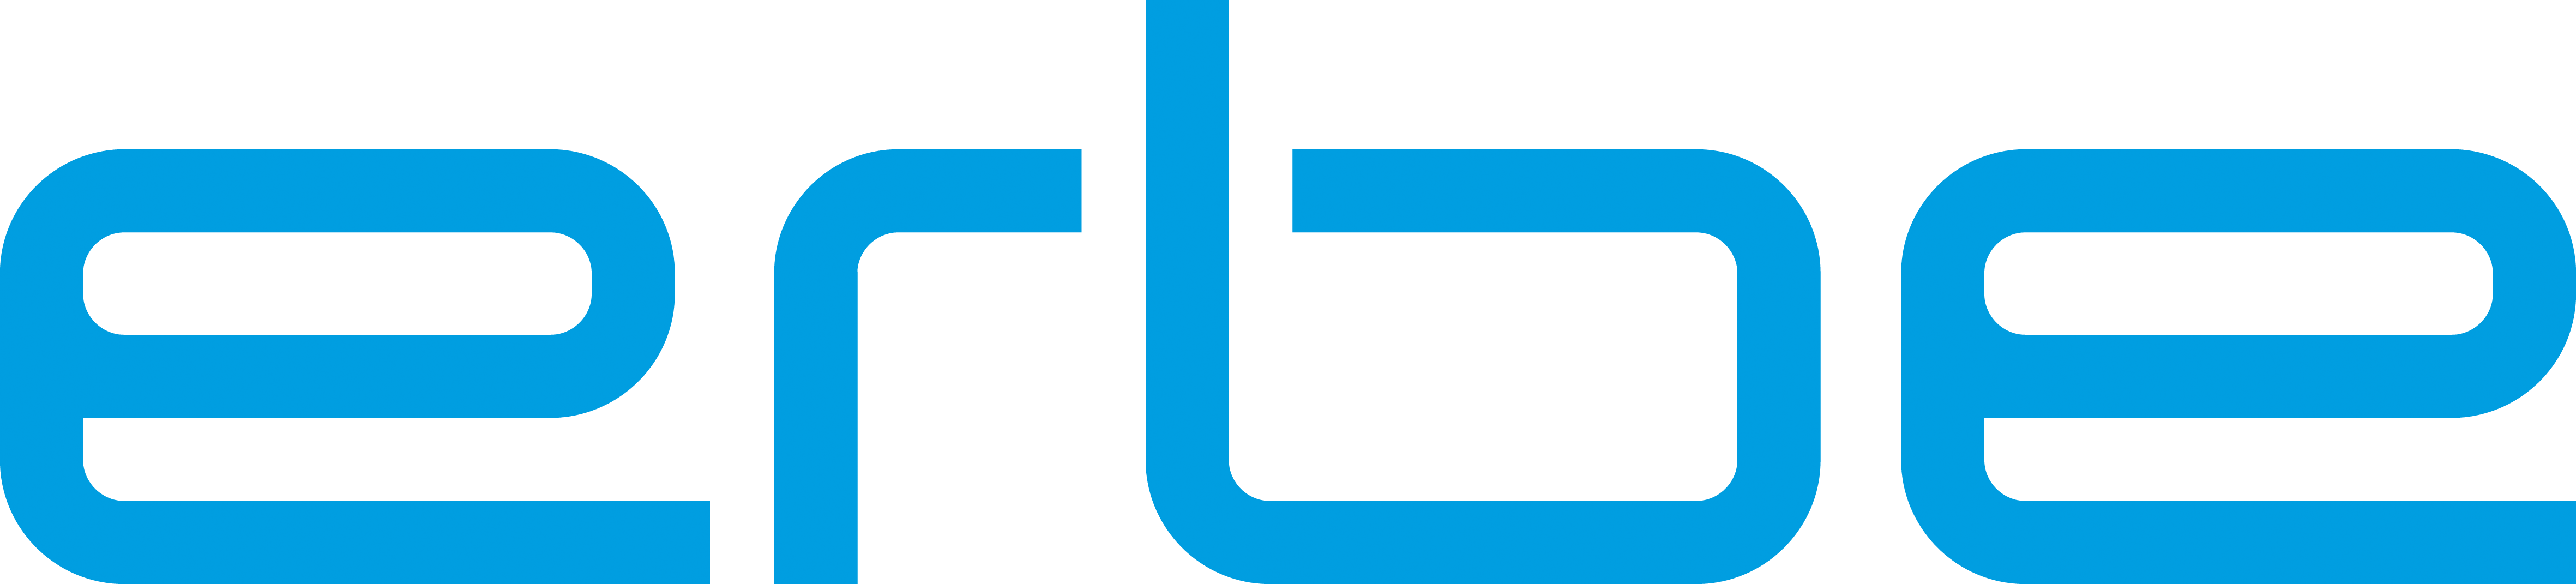 Erbe_Logo_RGB